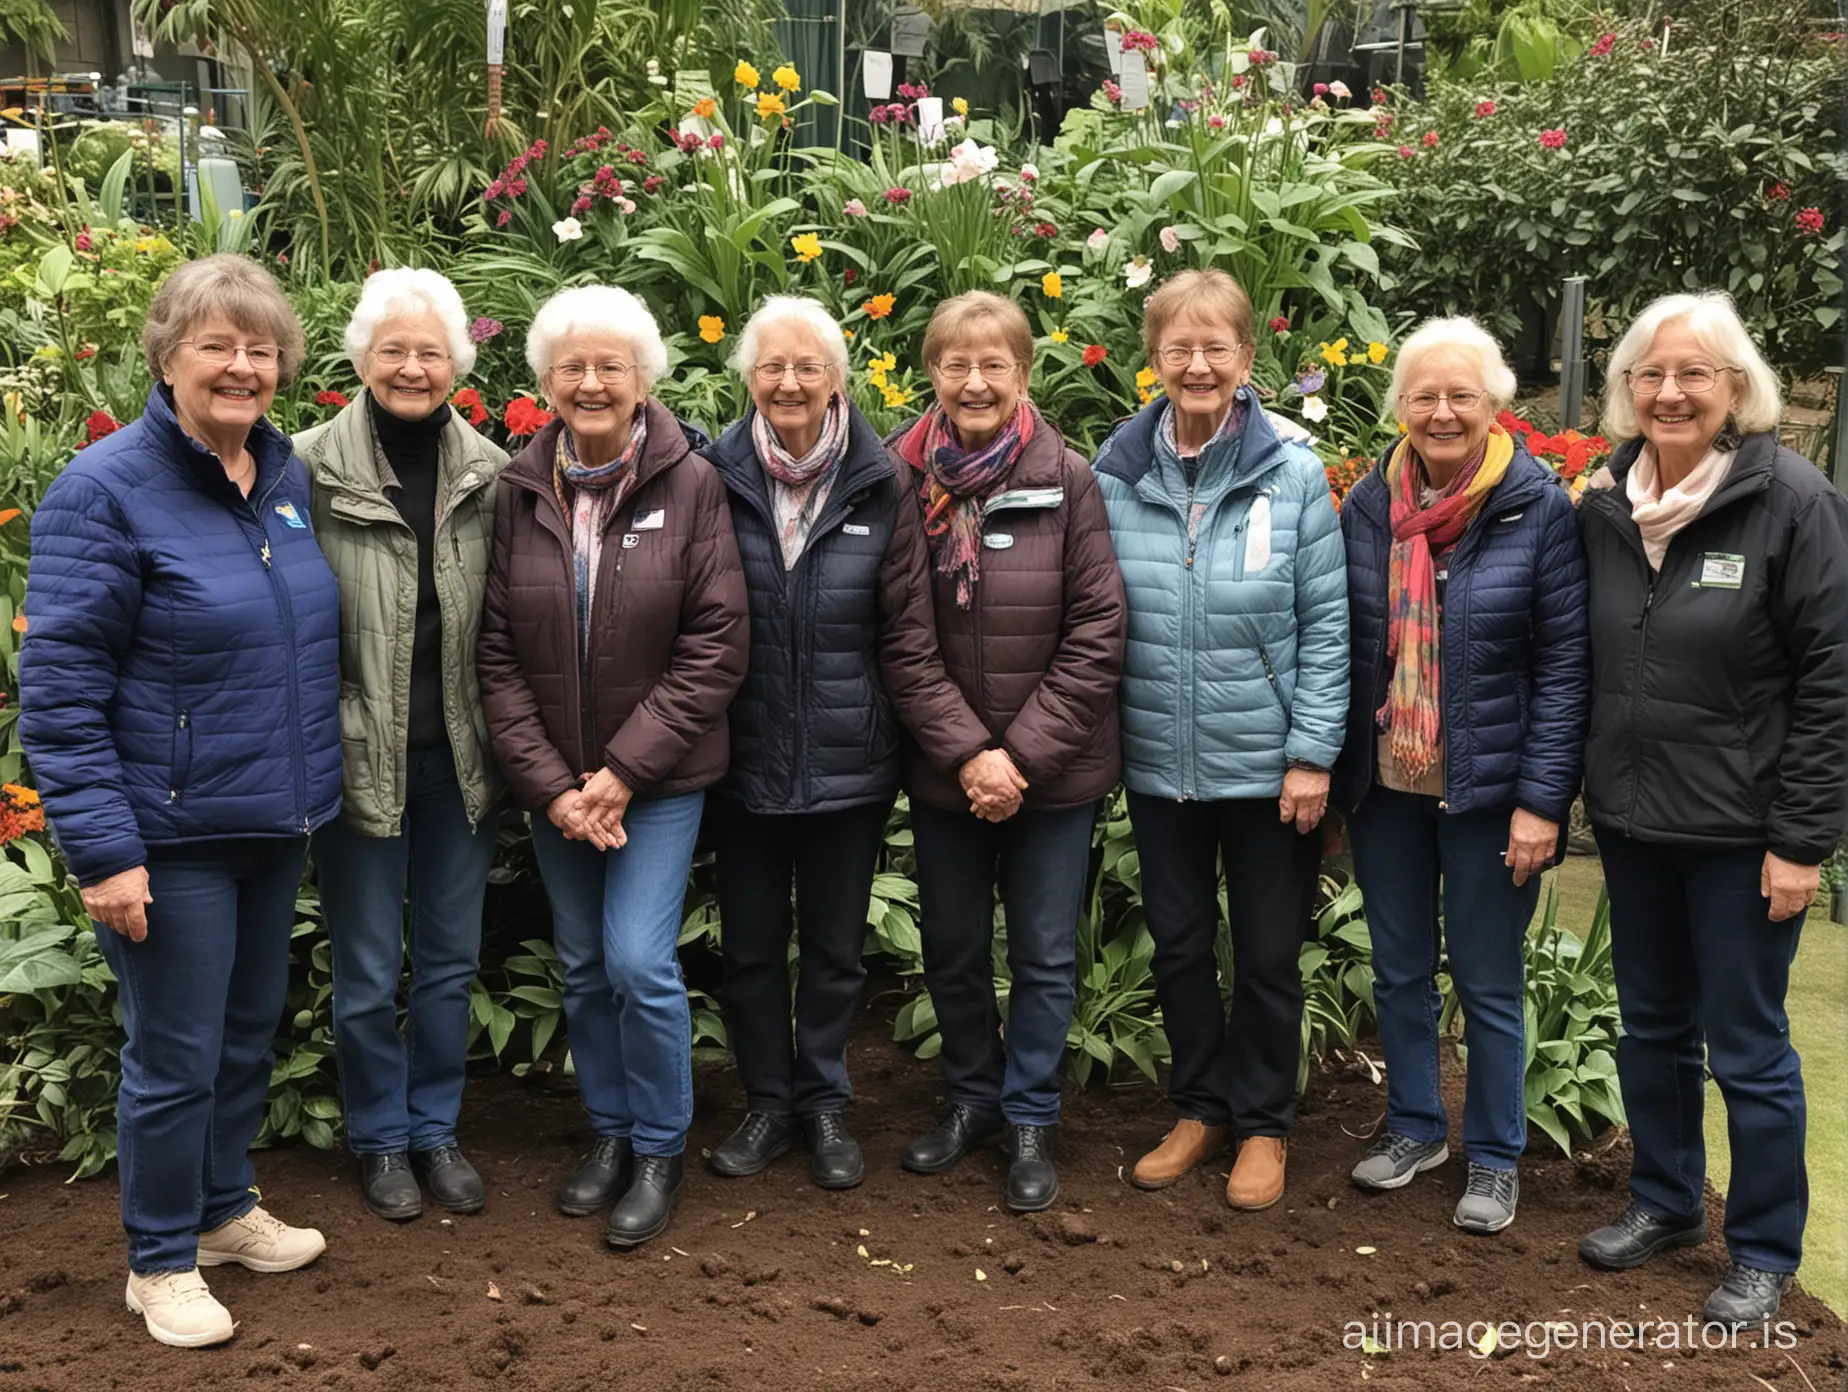 Senior-Travel-Group-Enjoying-Botanical-Garden-Show